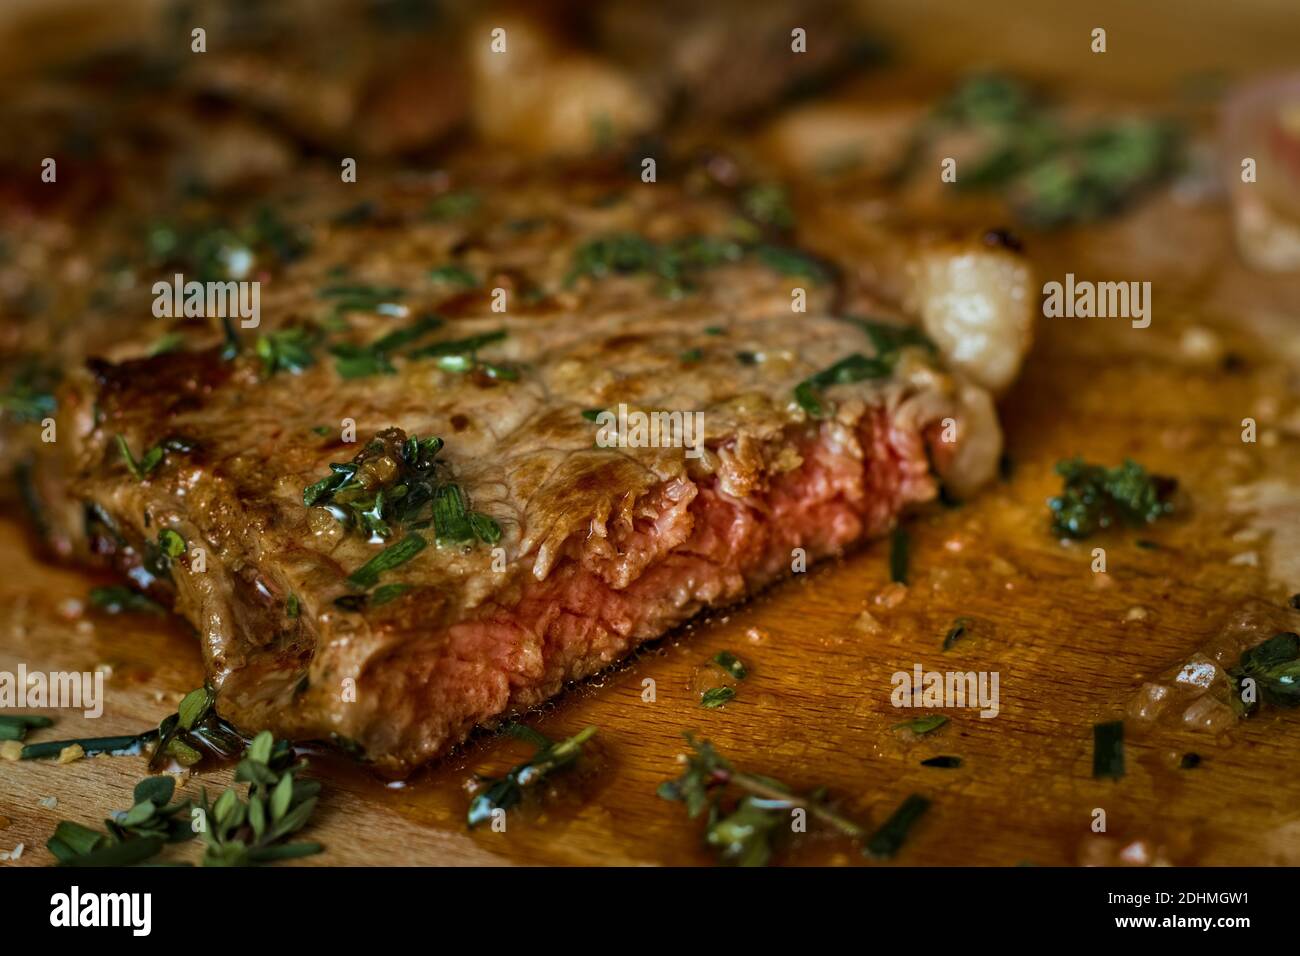 Freshly seared medium rare sirloin steak on the chopping board Stock Photo